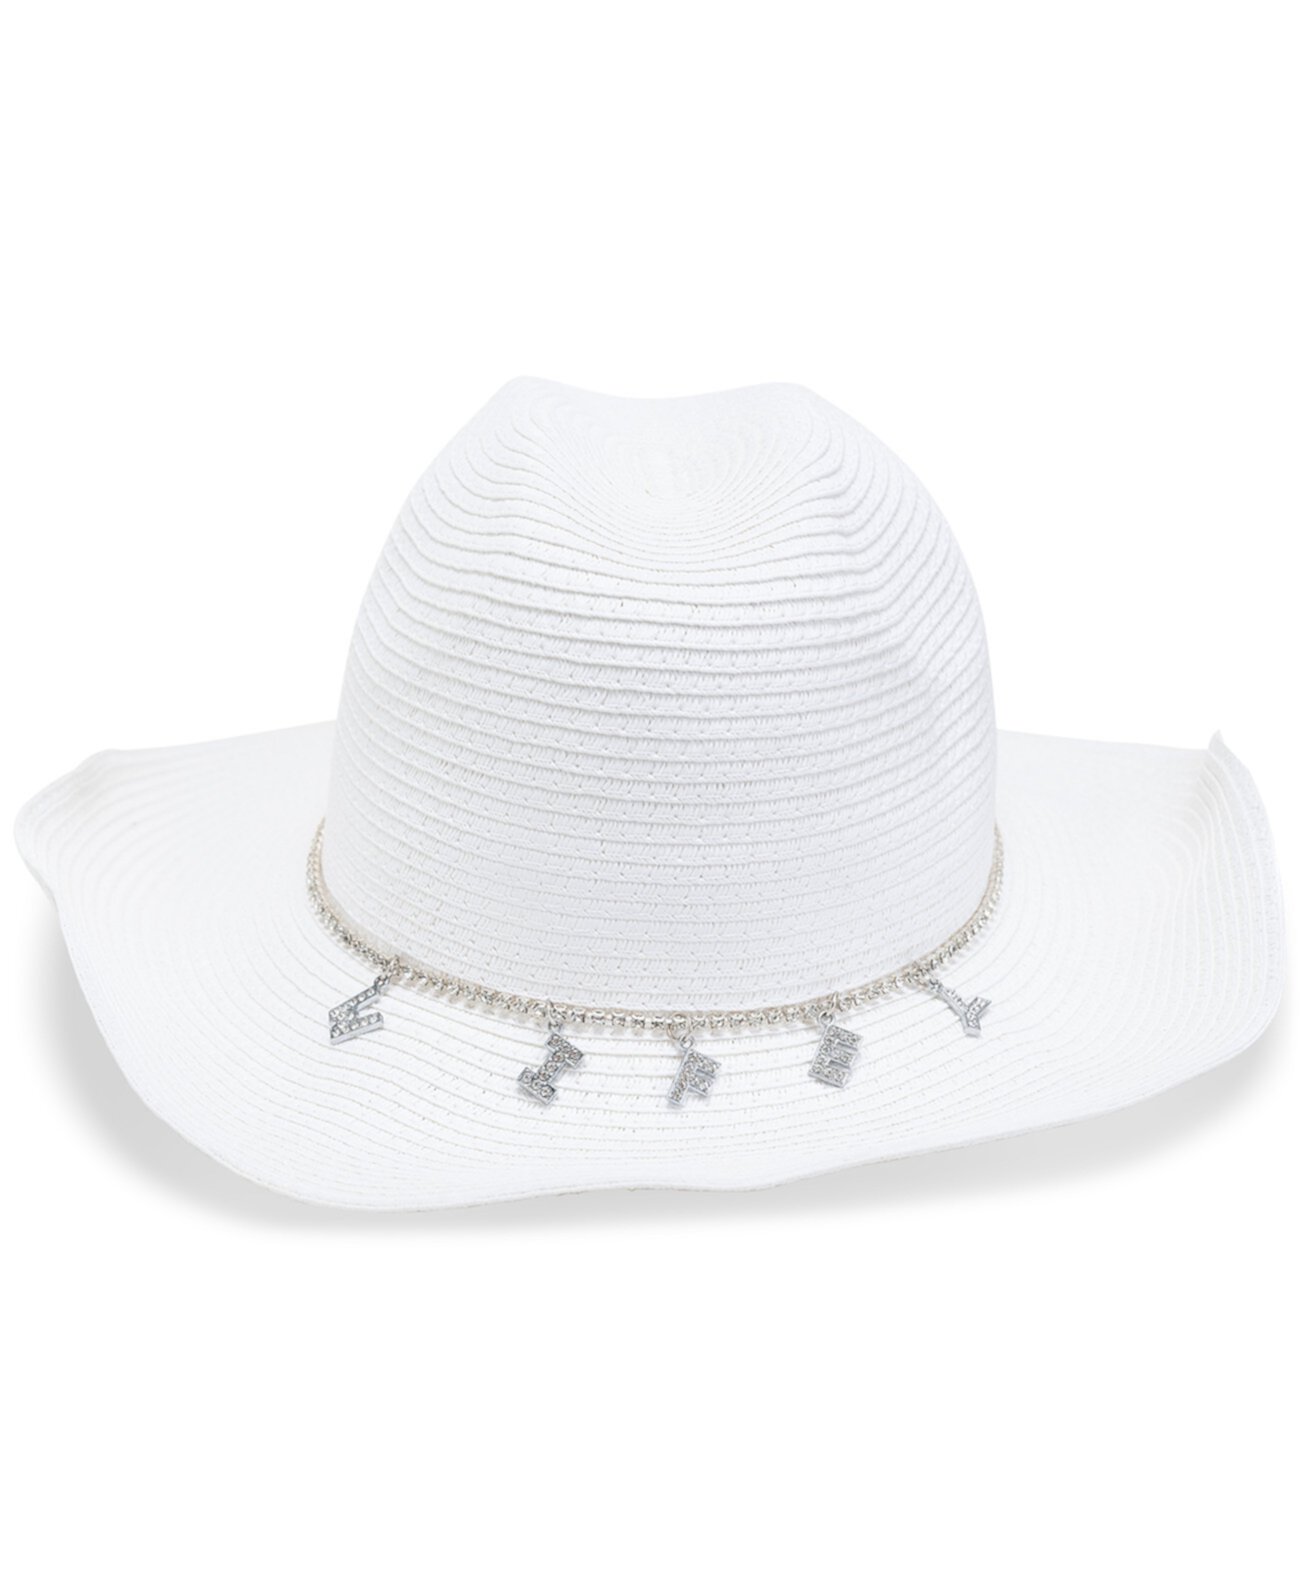 Women's Wifey Rhinestone Cowgirl Hat BELLISSIMA